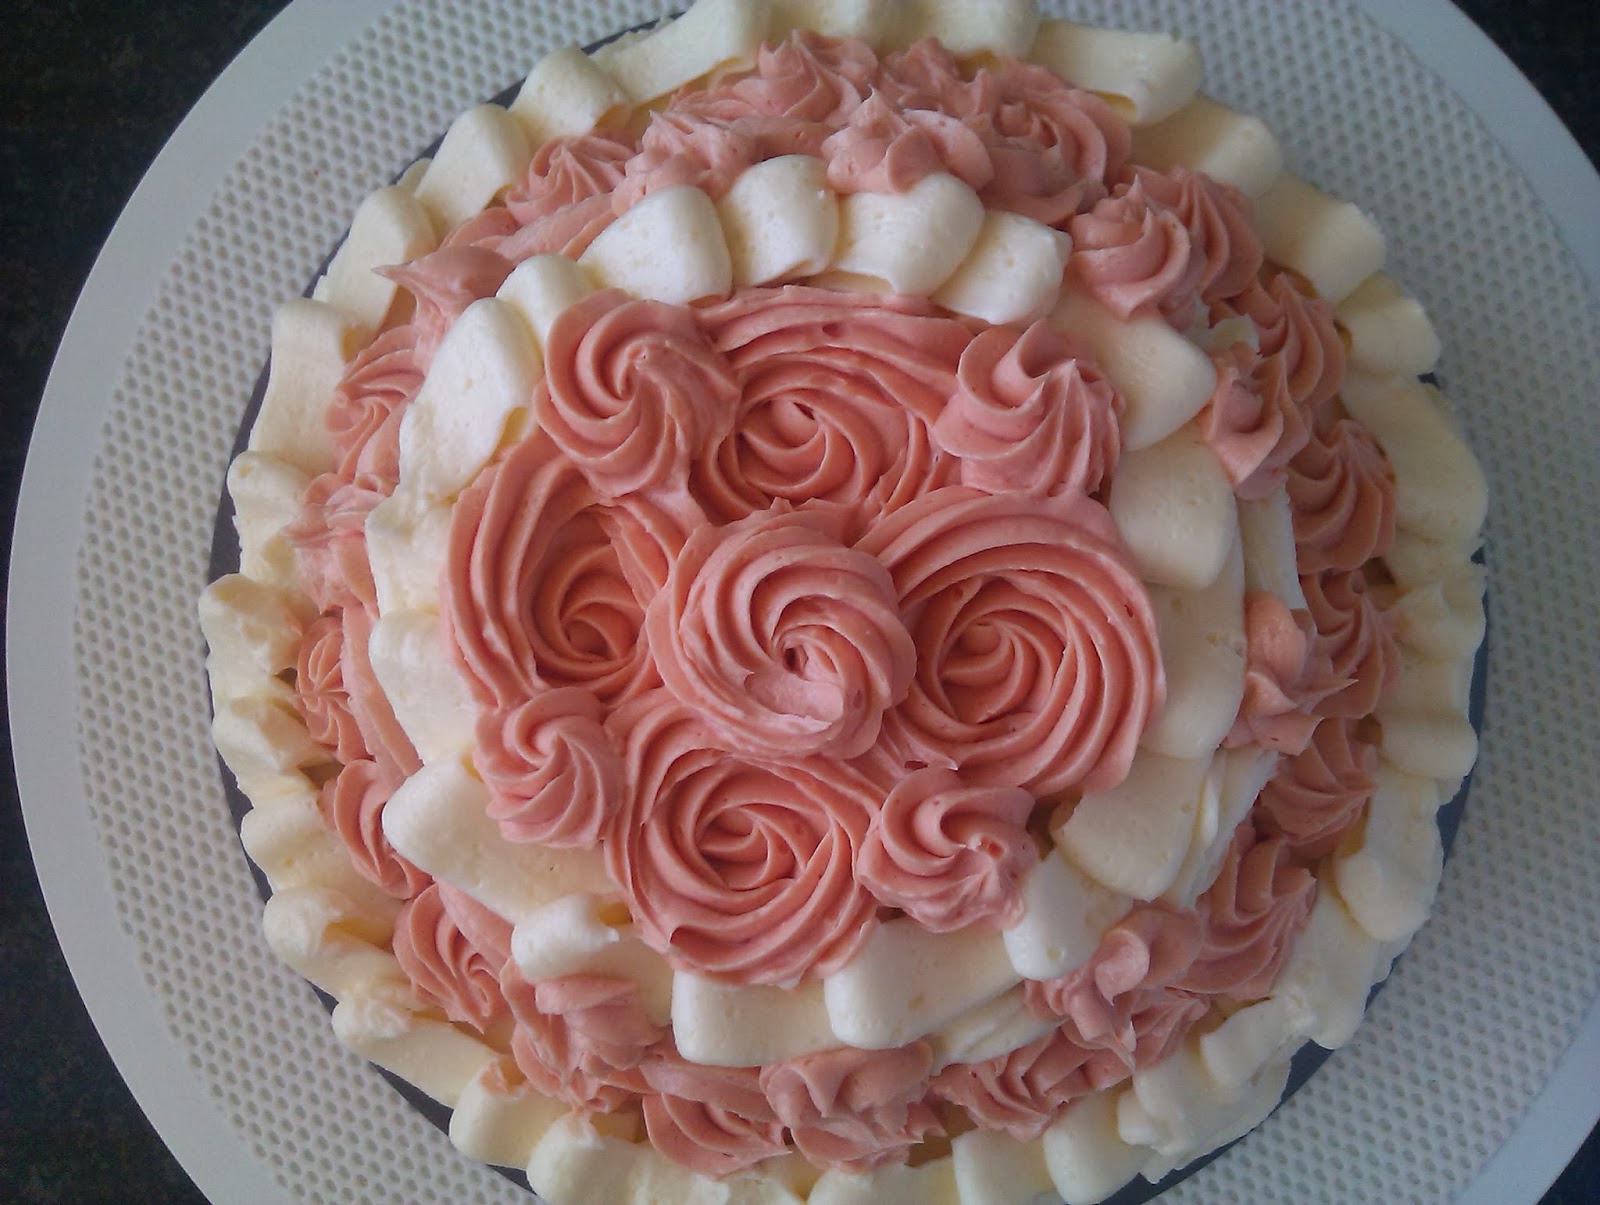 Medwin House Bakery: Decorating Rose Cake - Practice makes ...